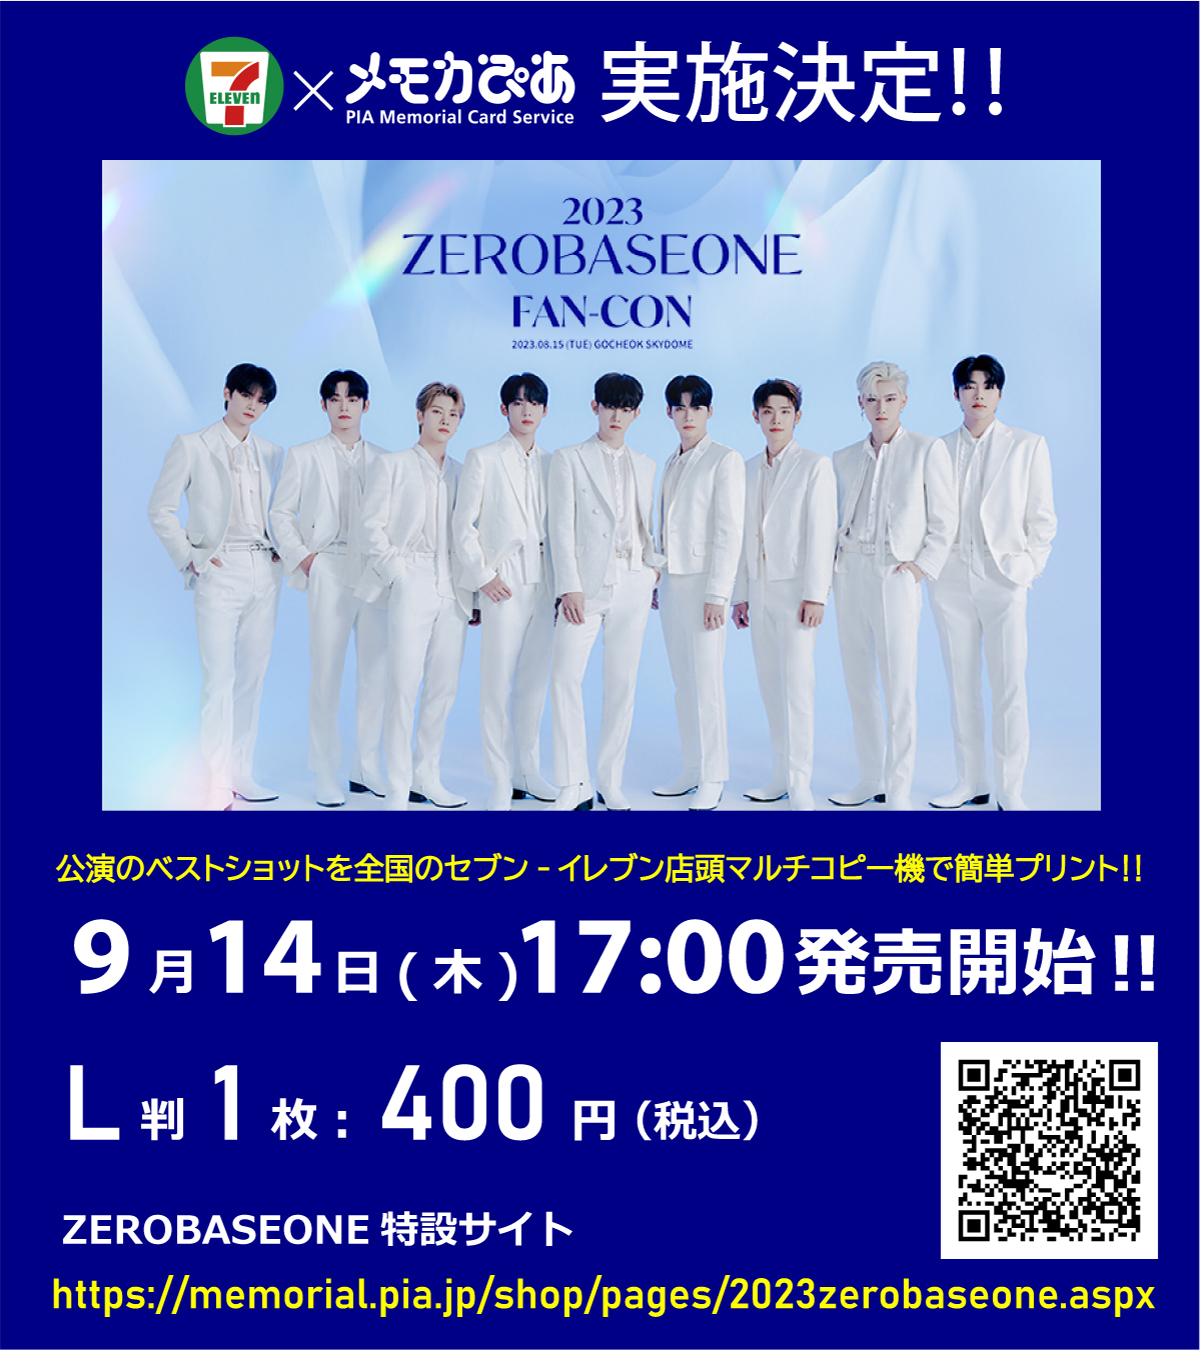 『2023 ZEROBASEONE FAN-CON』ベストショット、 セブン×メモカ9月14日（木）より販売開始!